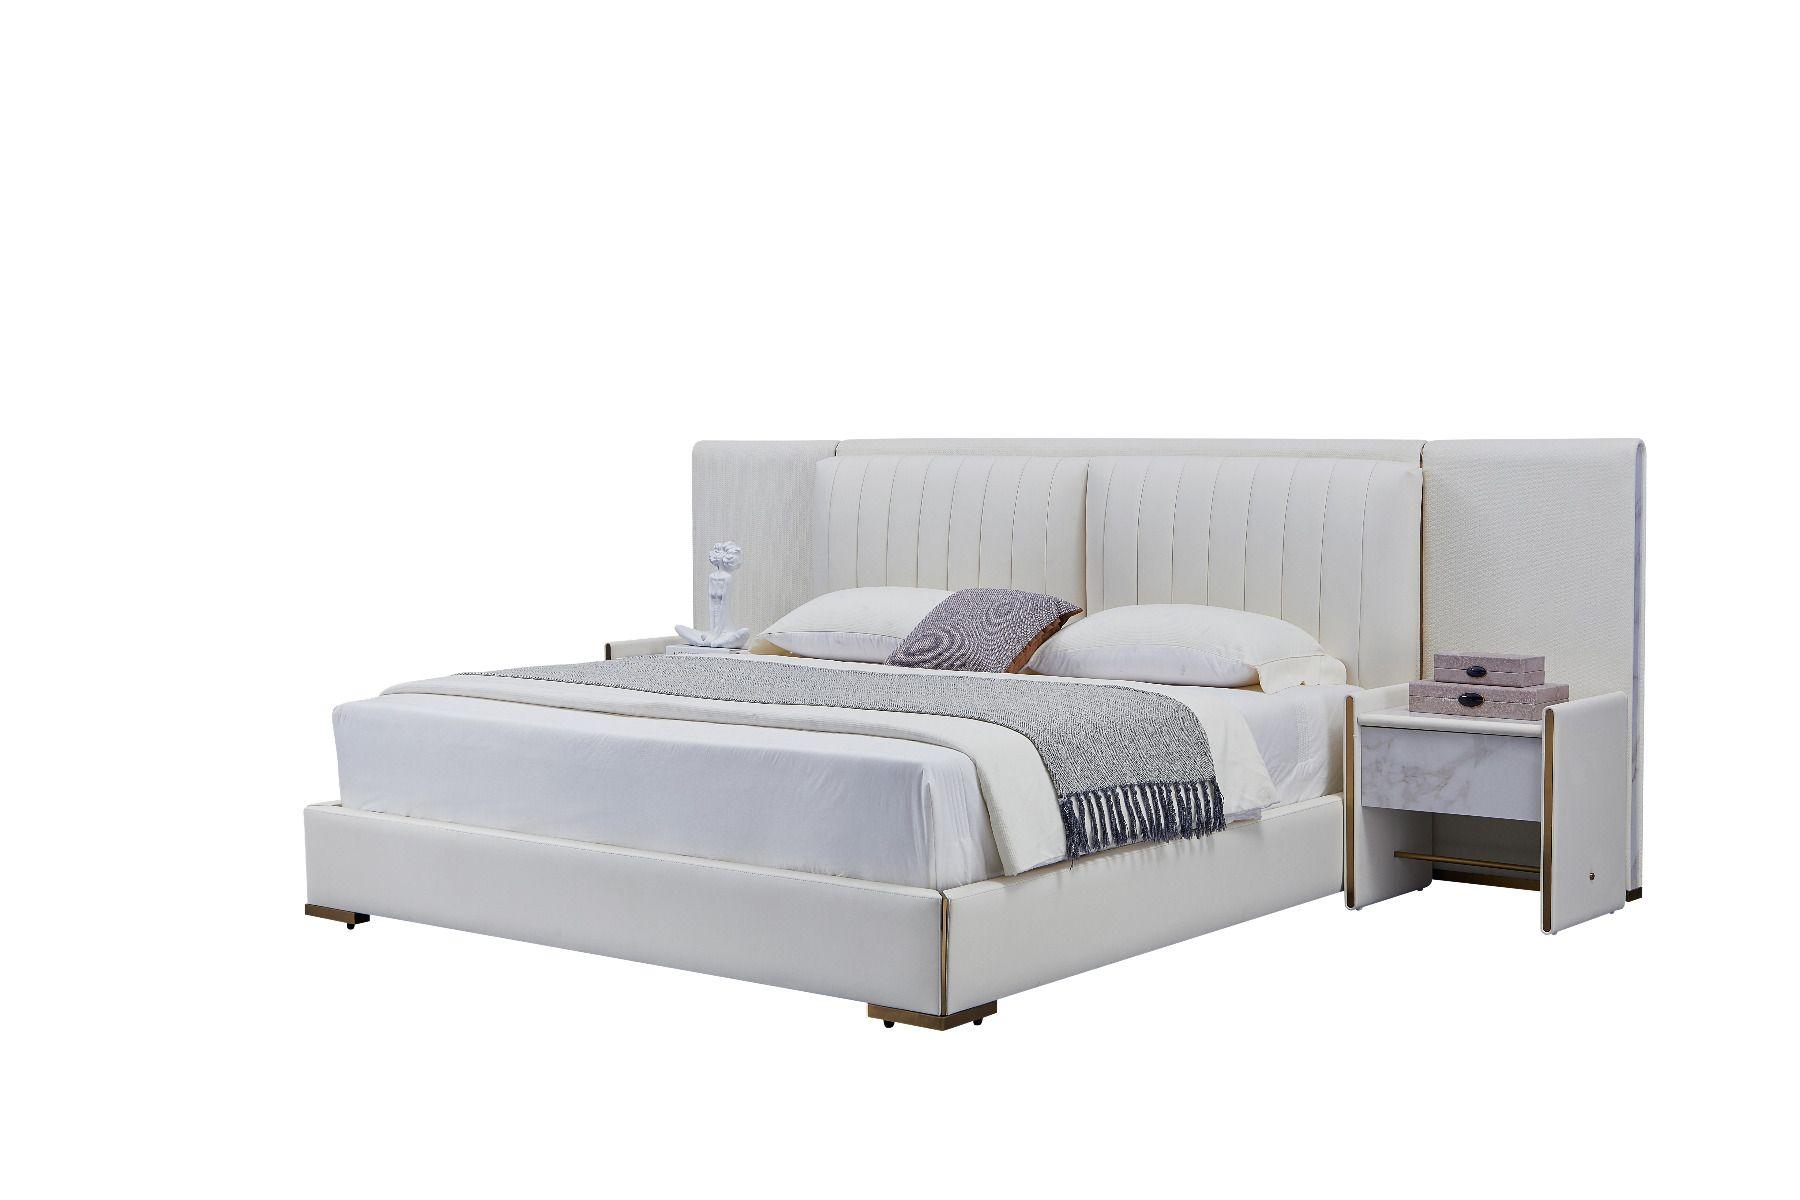 

    
American Eagle Furniture B-Y2008-CK Platform Bed Gray B-Y2008-CK
